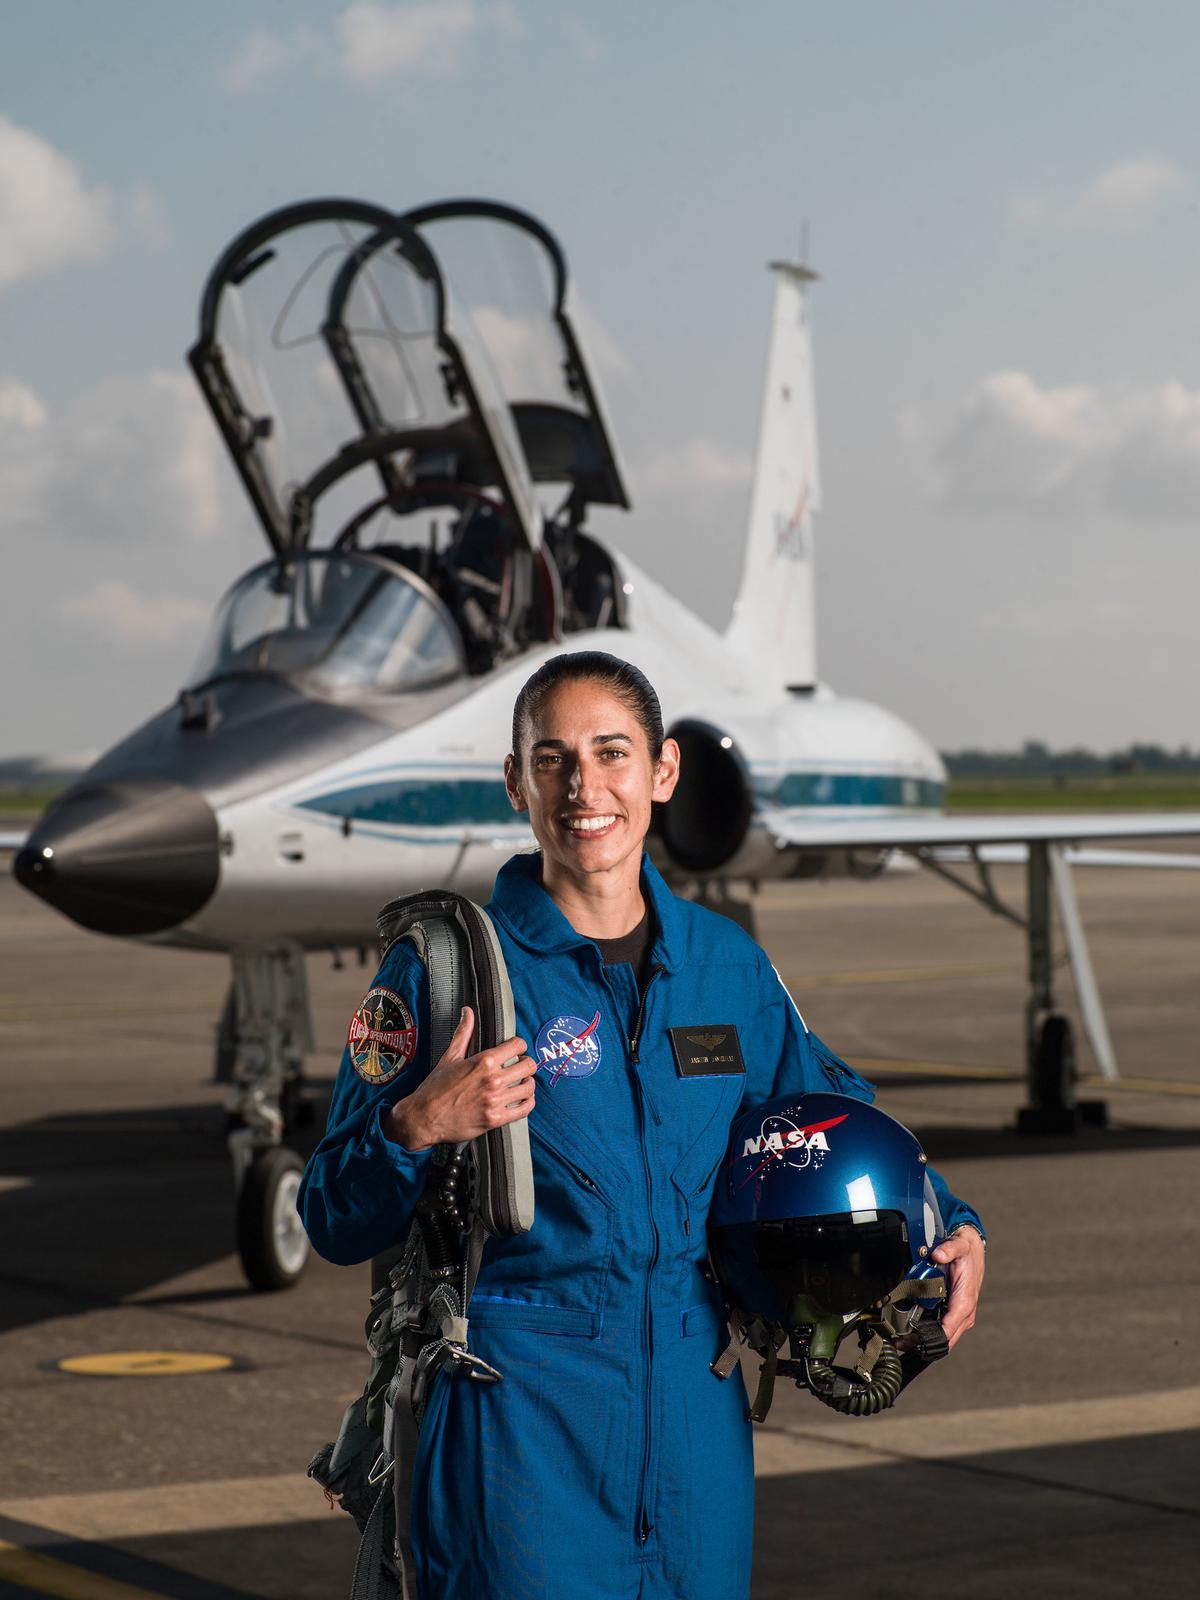 NASA astronaut candidate Jasmin Moghbeli pictured at Ellington Field Joint Reserve Base in Houston, Texas, on June 6, 2017 (©NASA | <a href="https://www.flickr.com/photos/nasa2explore/42959442420/in/album-72157698260056092/">Robert Markowitz</a>)